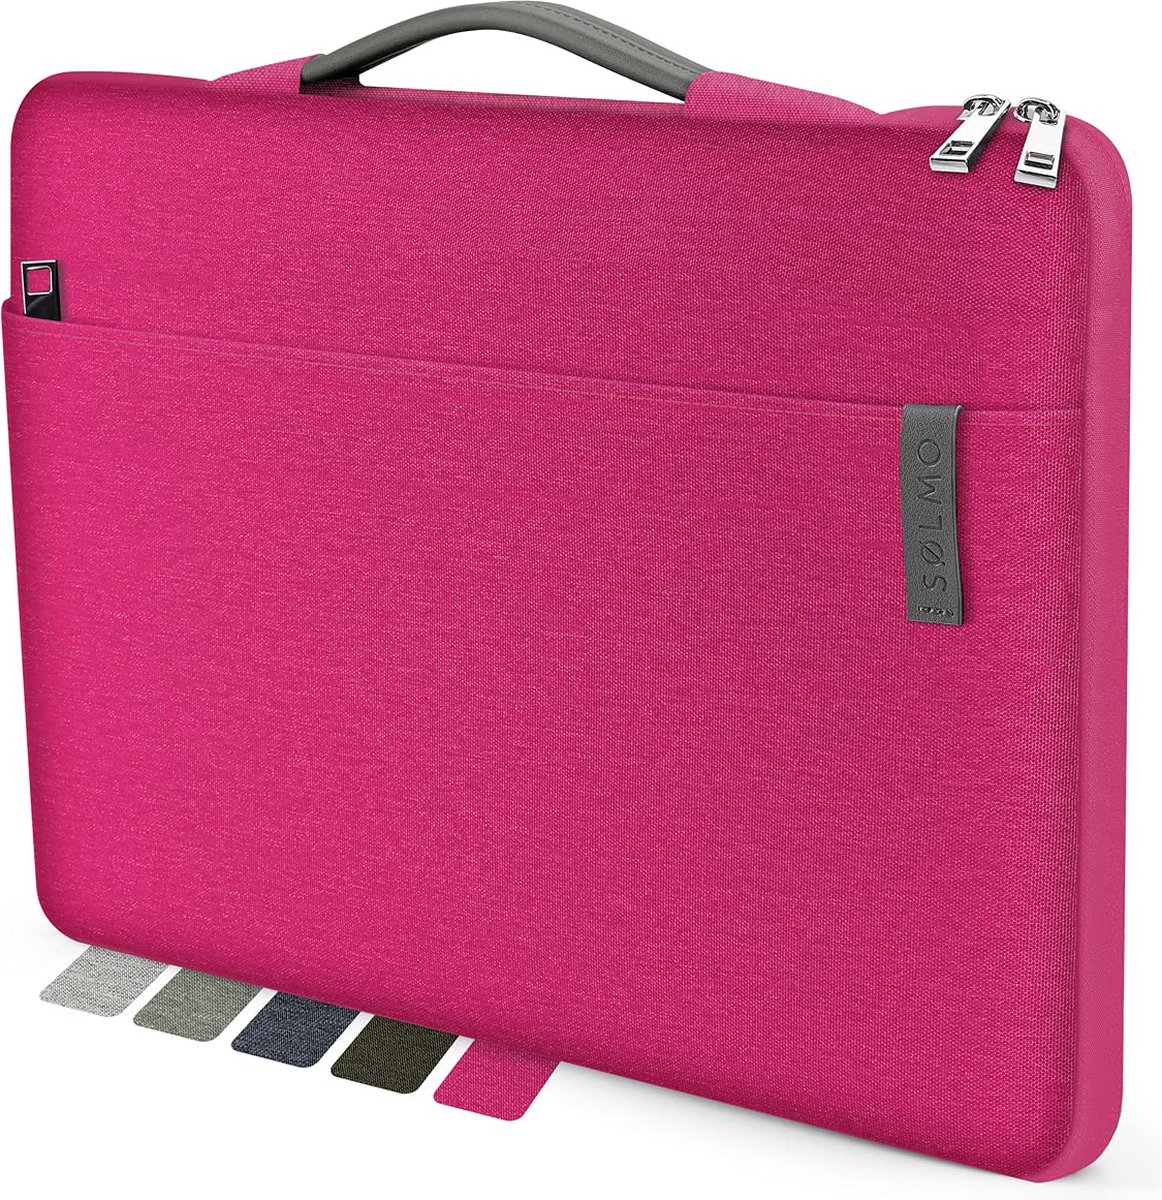 sølmo I Design Laptop Bag 13-13.3 Inch, Laptop Sleeve 13.3 Inch, Schokbestendige Notebook Case Compatibel met 13